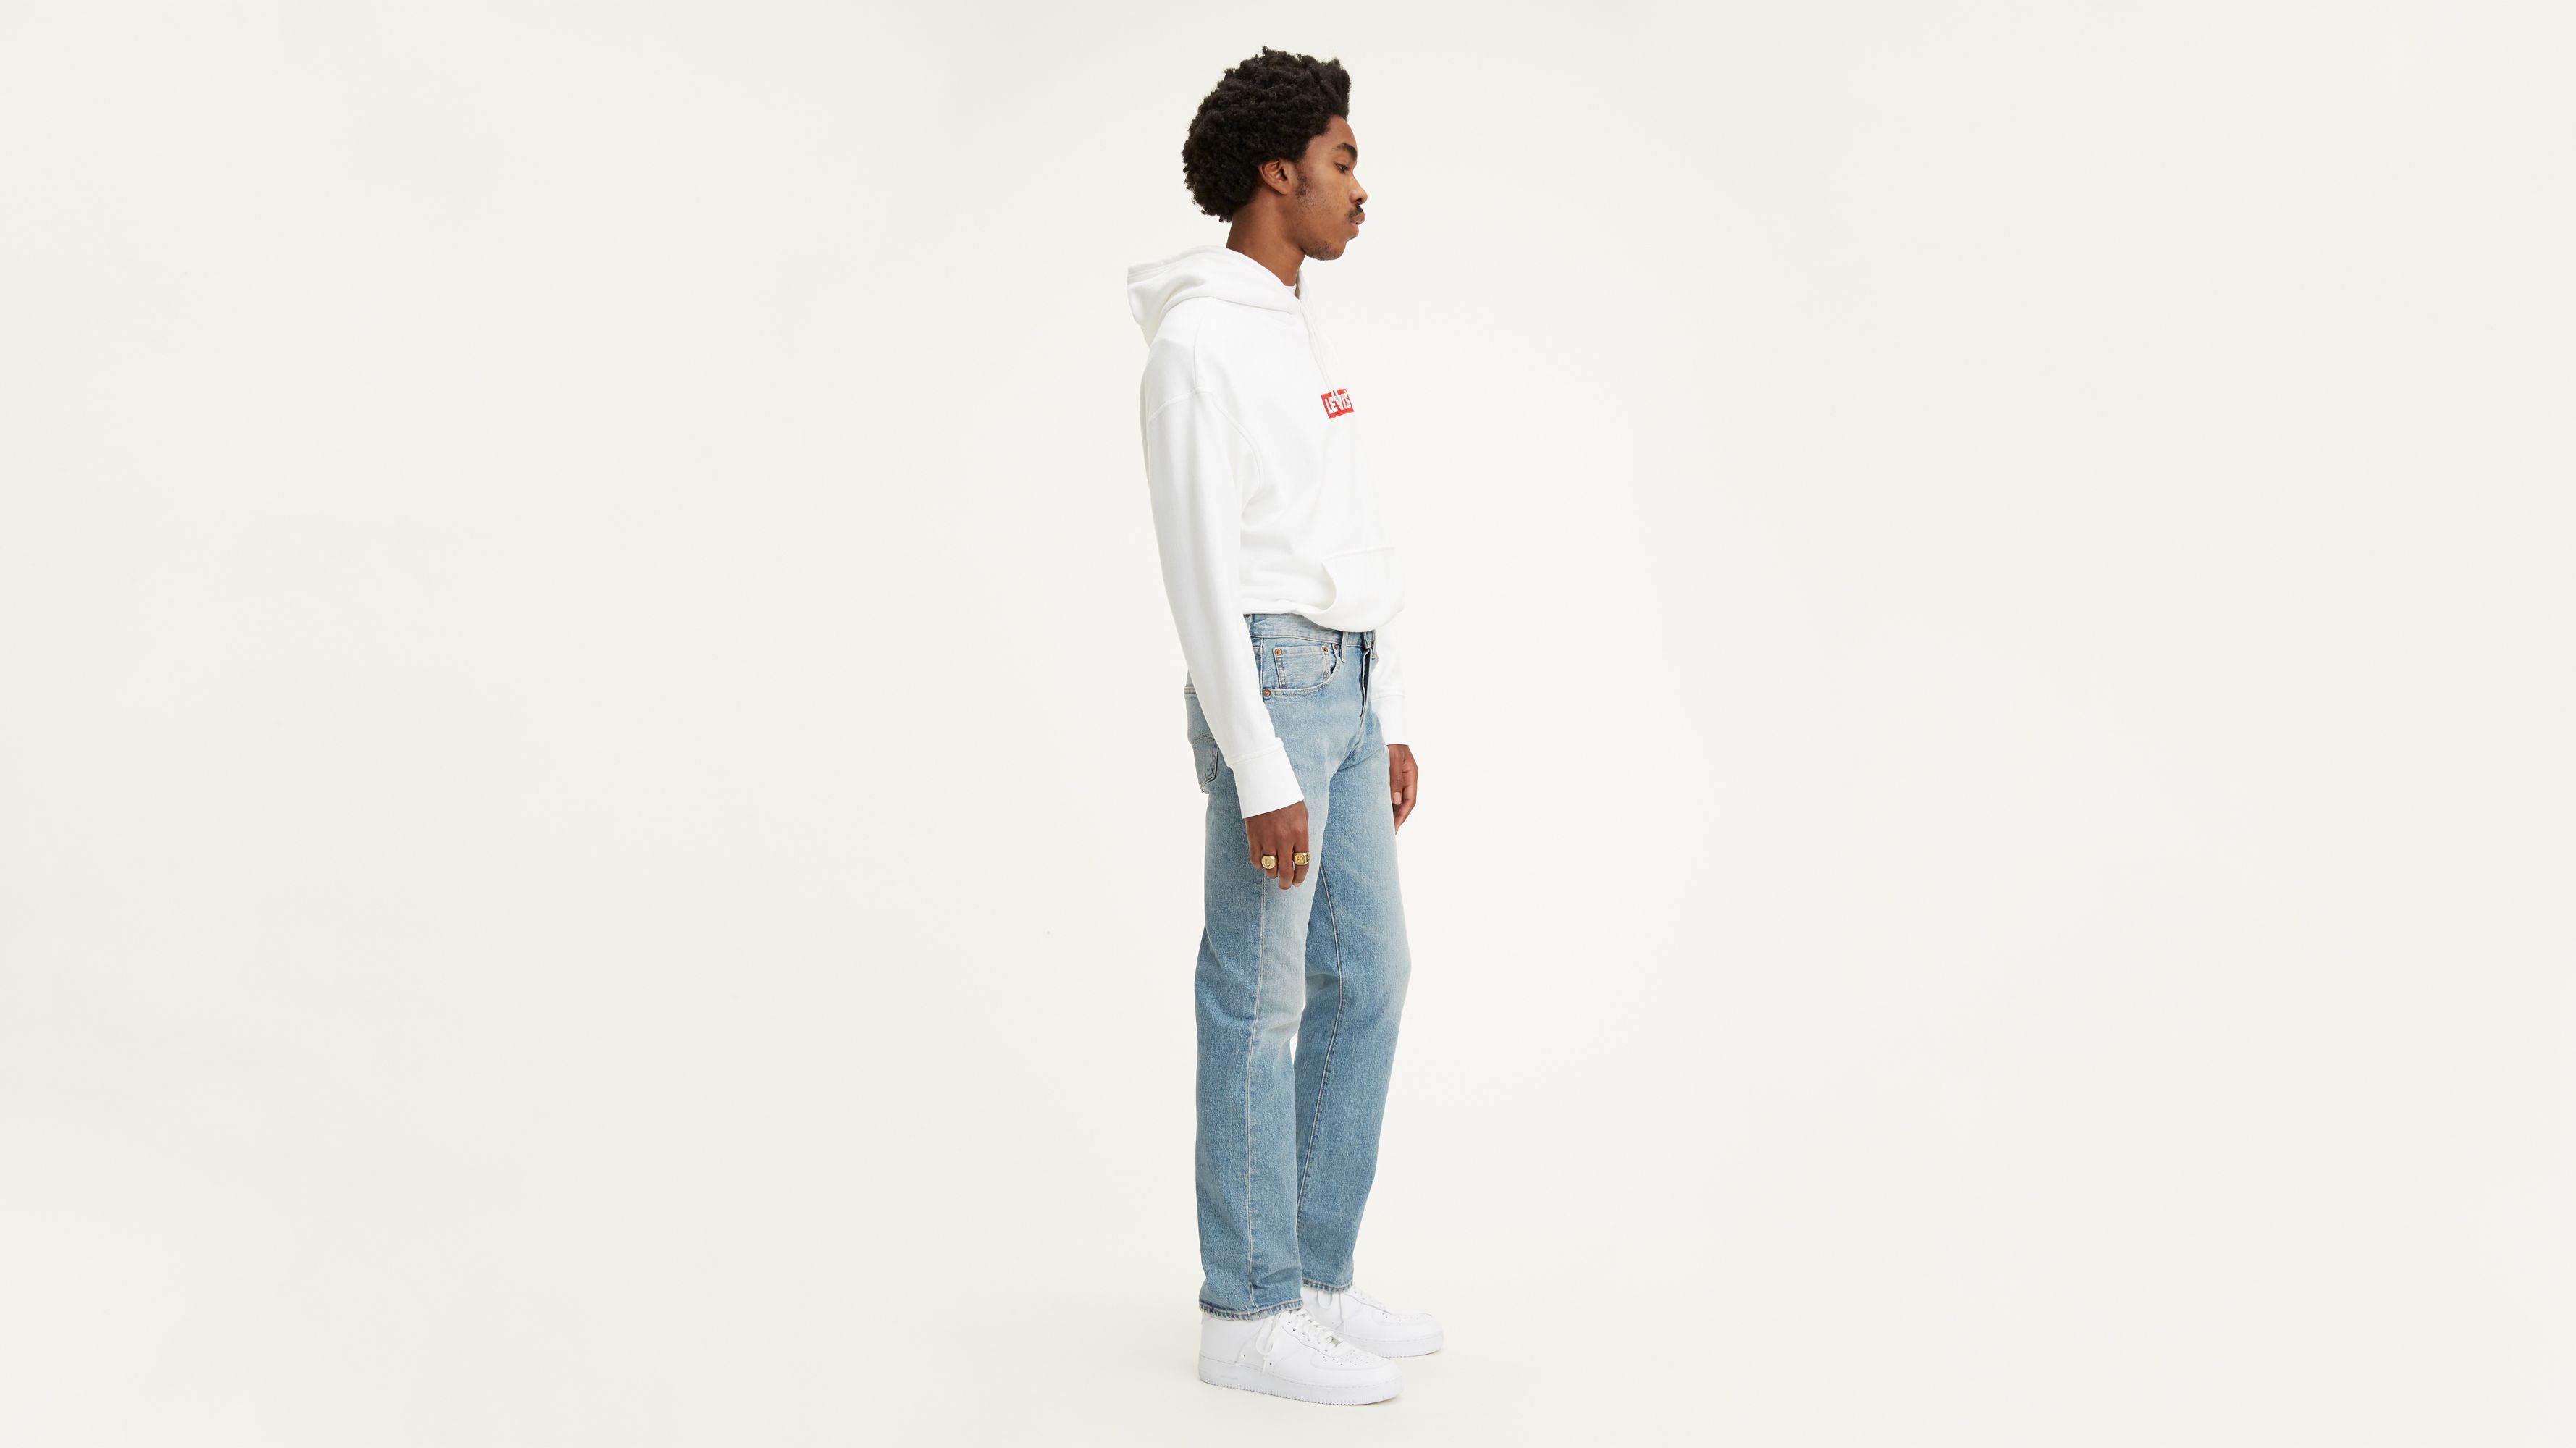 mens levi's 501 original fit stretch jeans